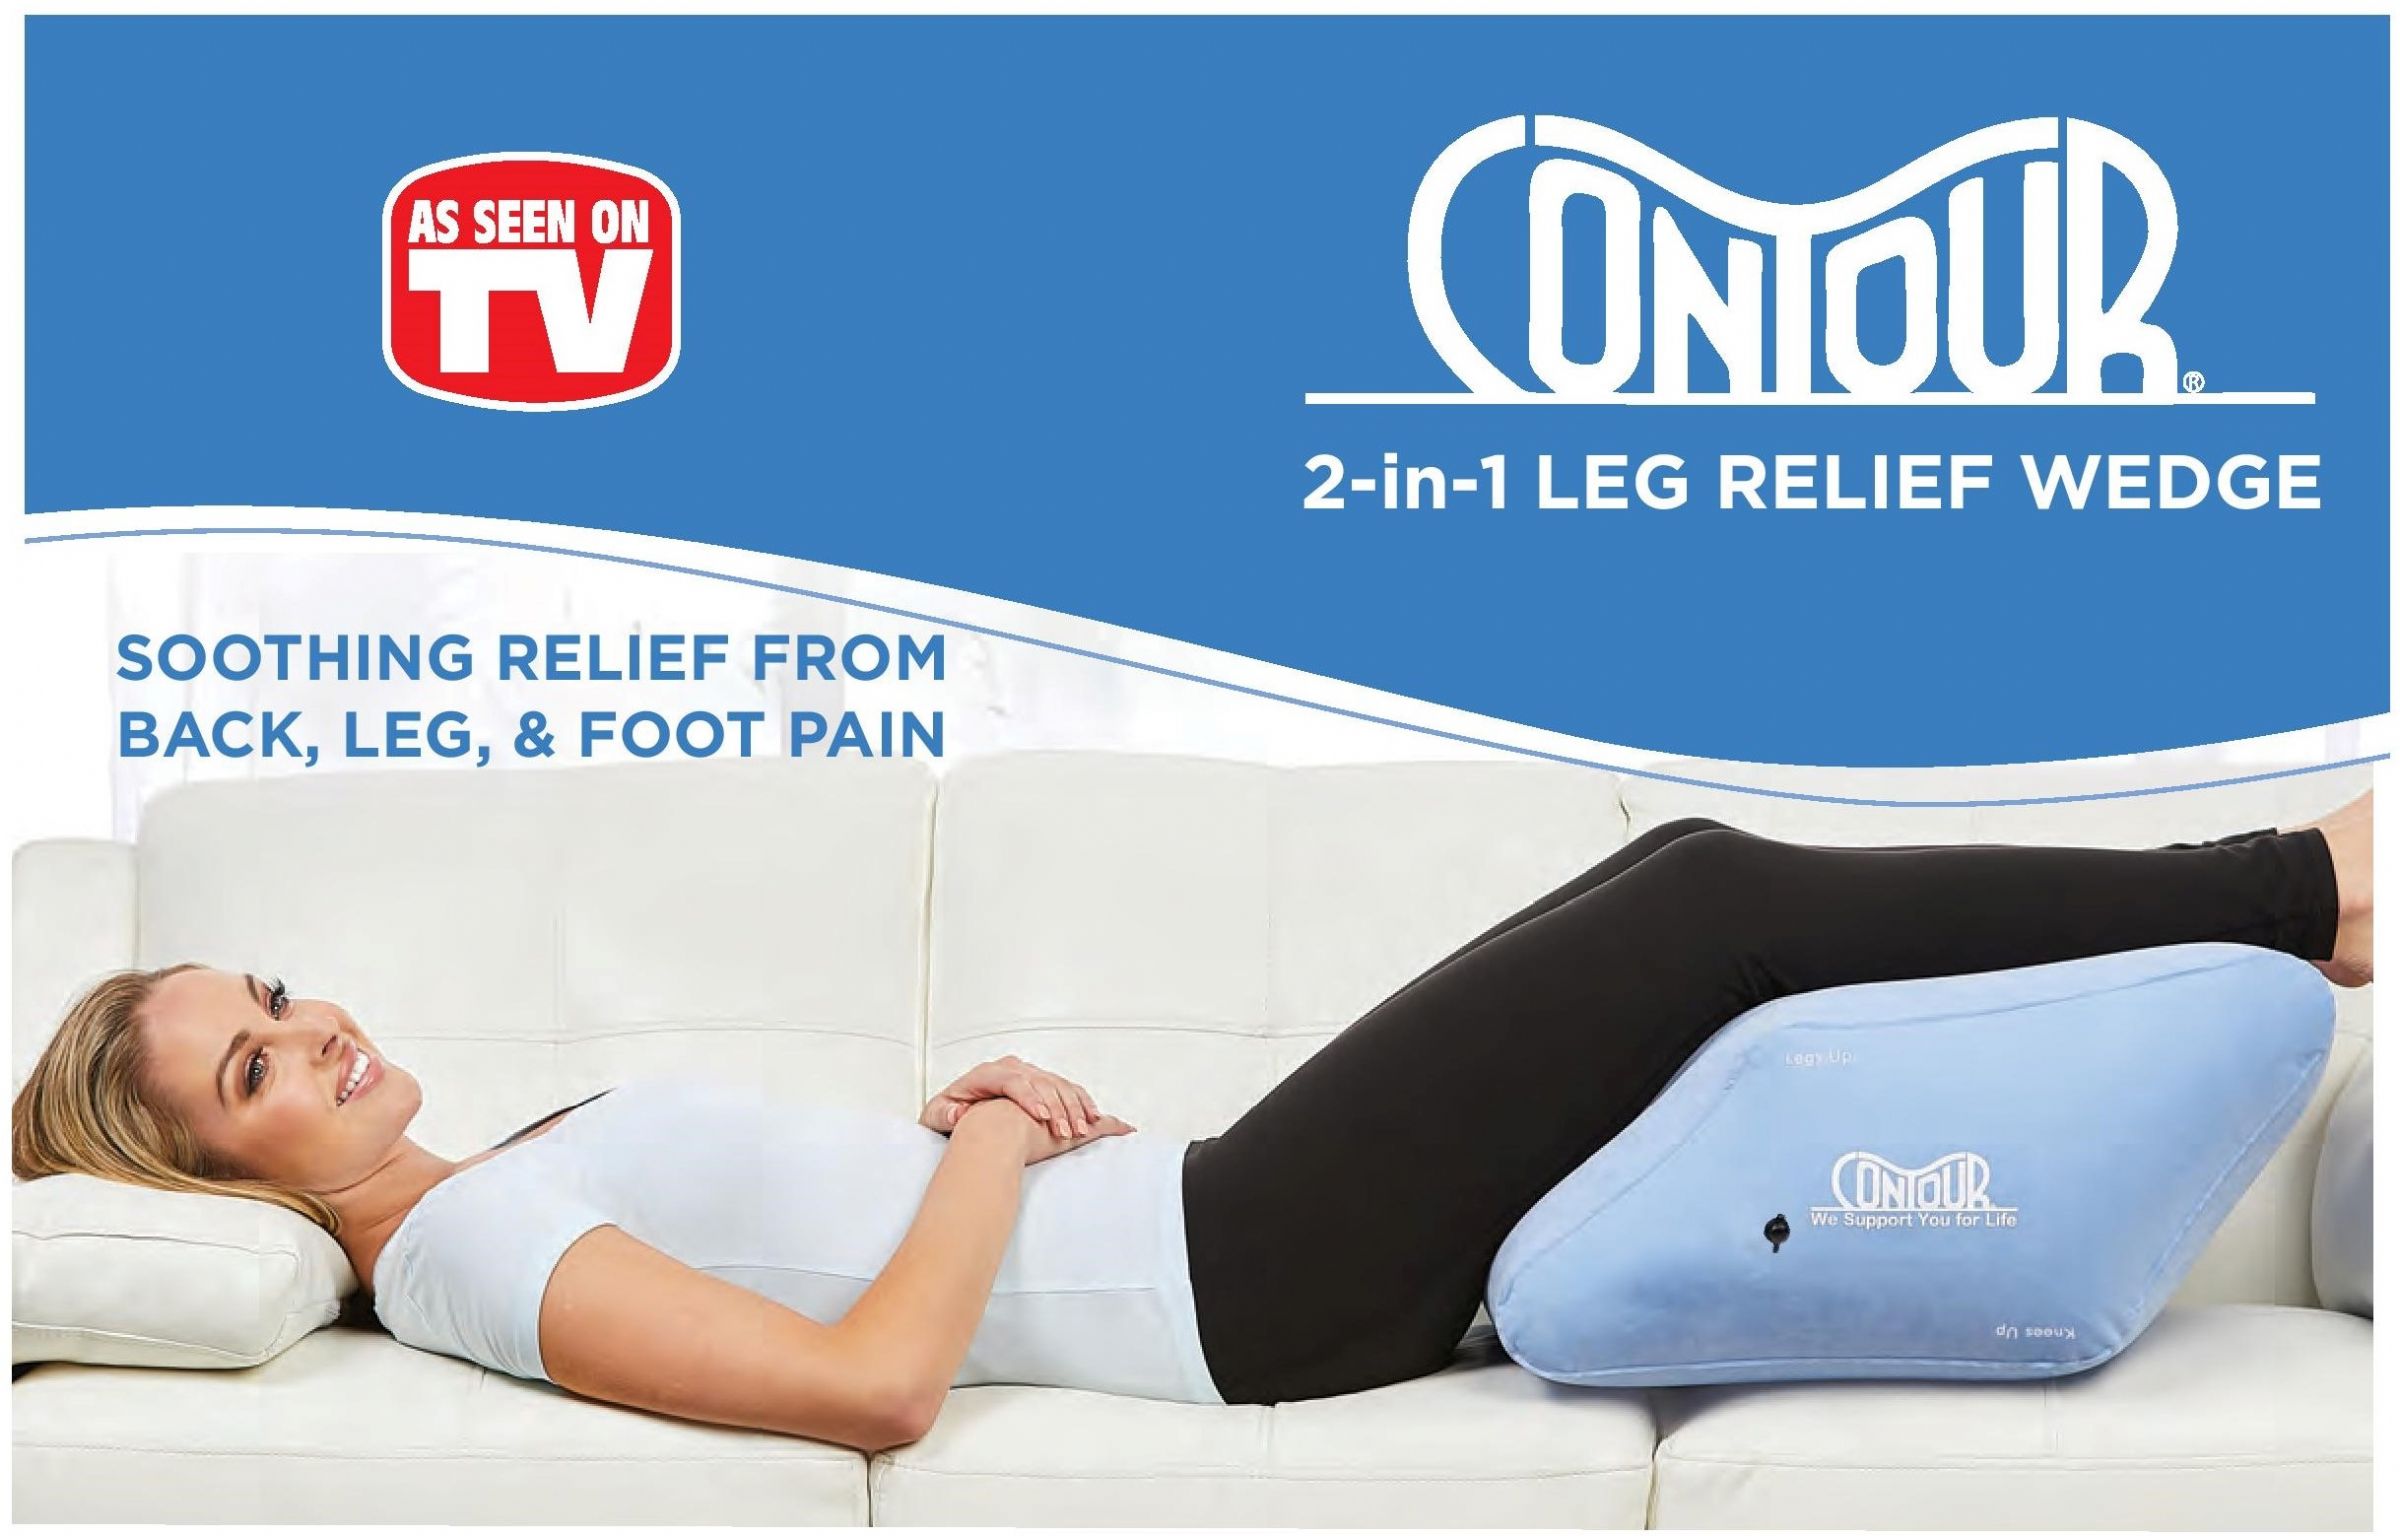 The Original Contour Legacy Leg Pillow As Seen On TV